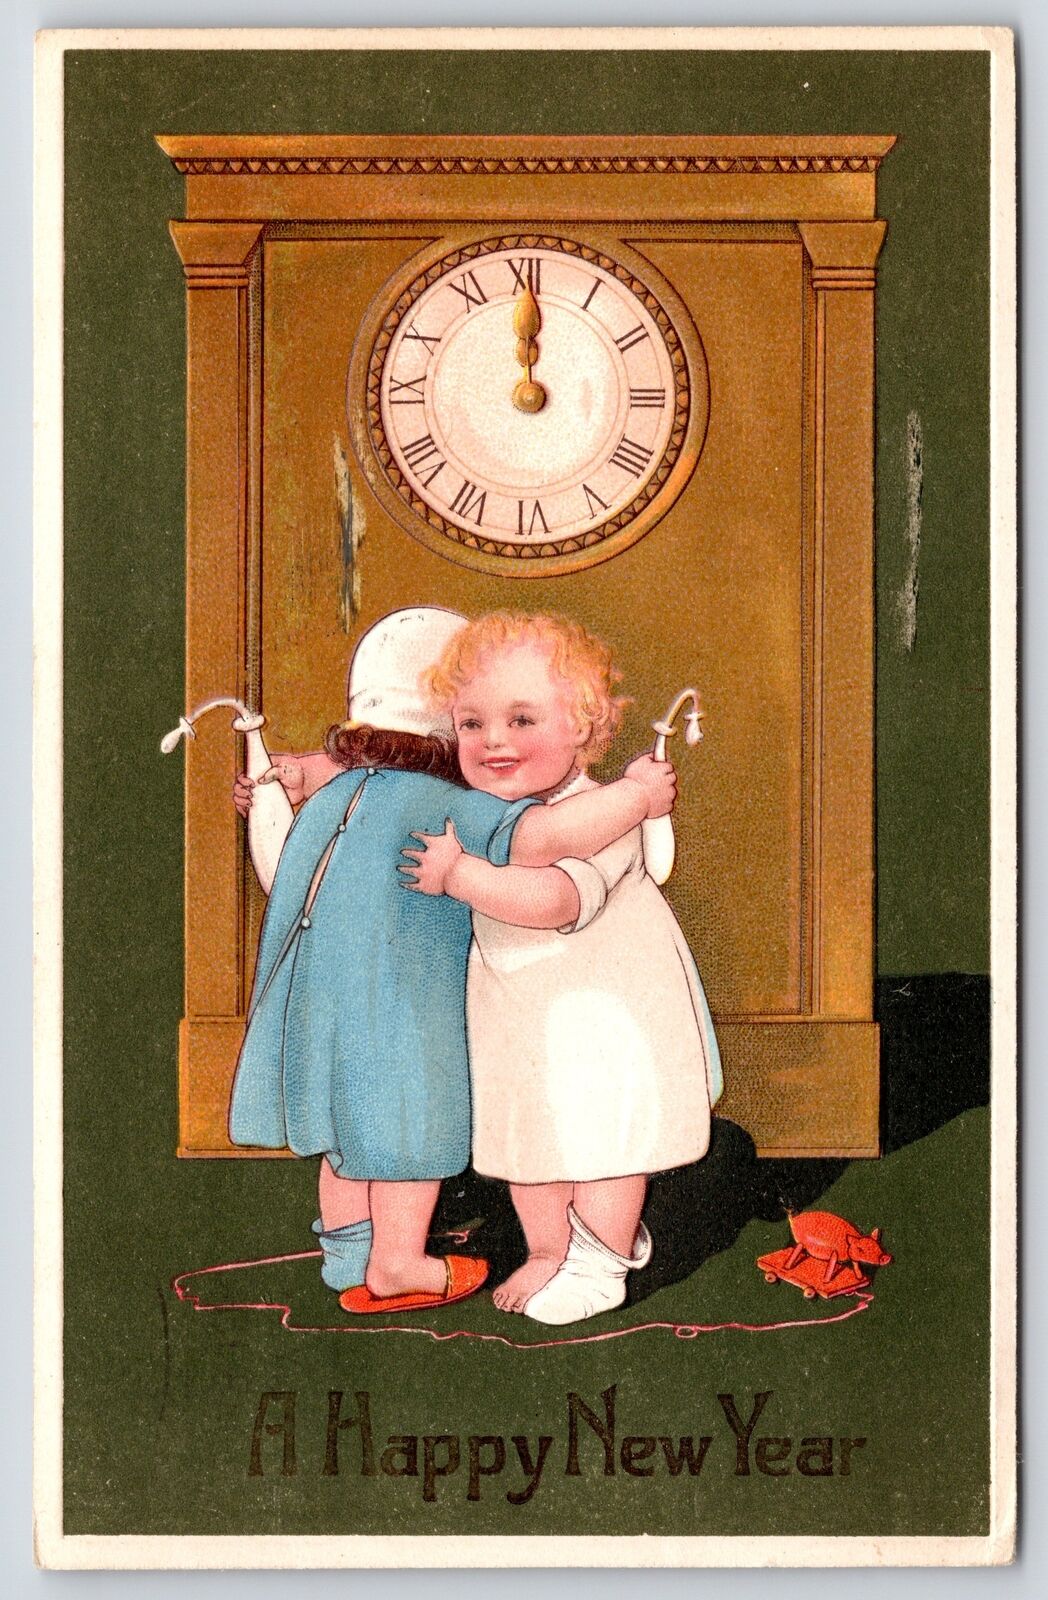 PFB Marie Flatscher New Year~Two Toddler Girls Hug by Grandfather Clock~1909